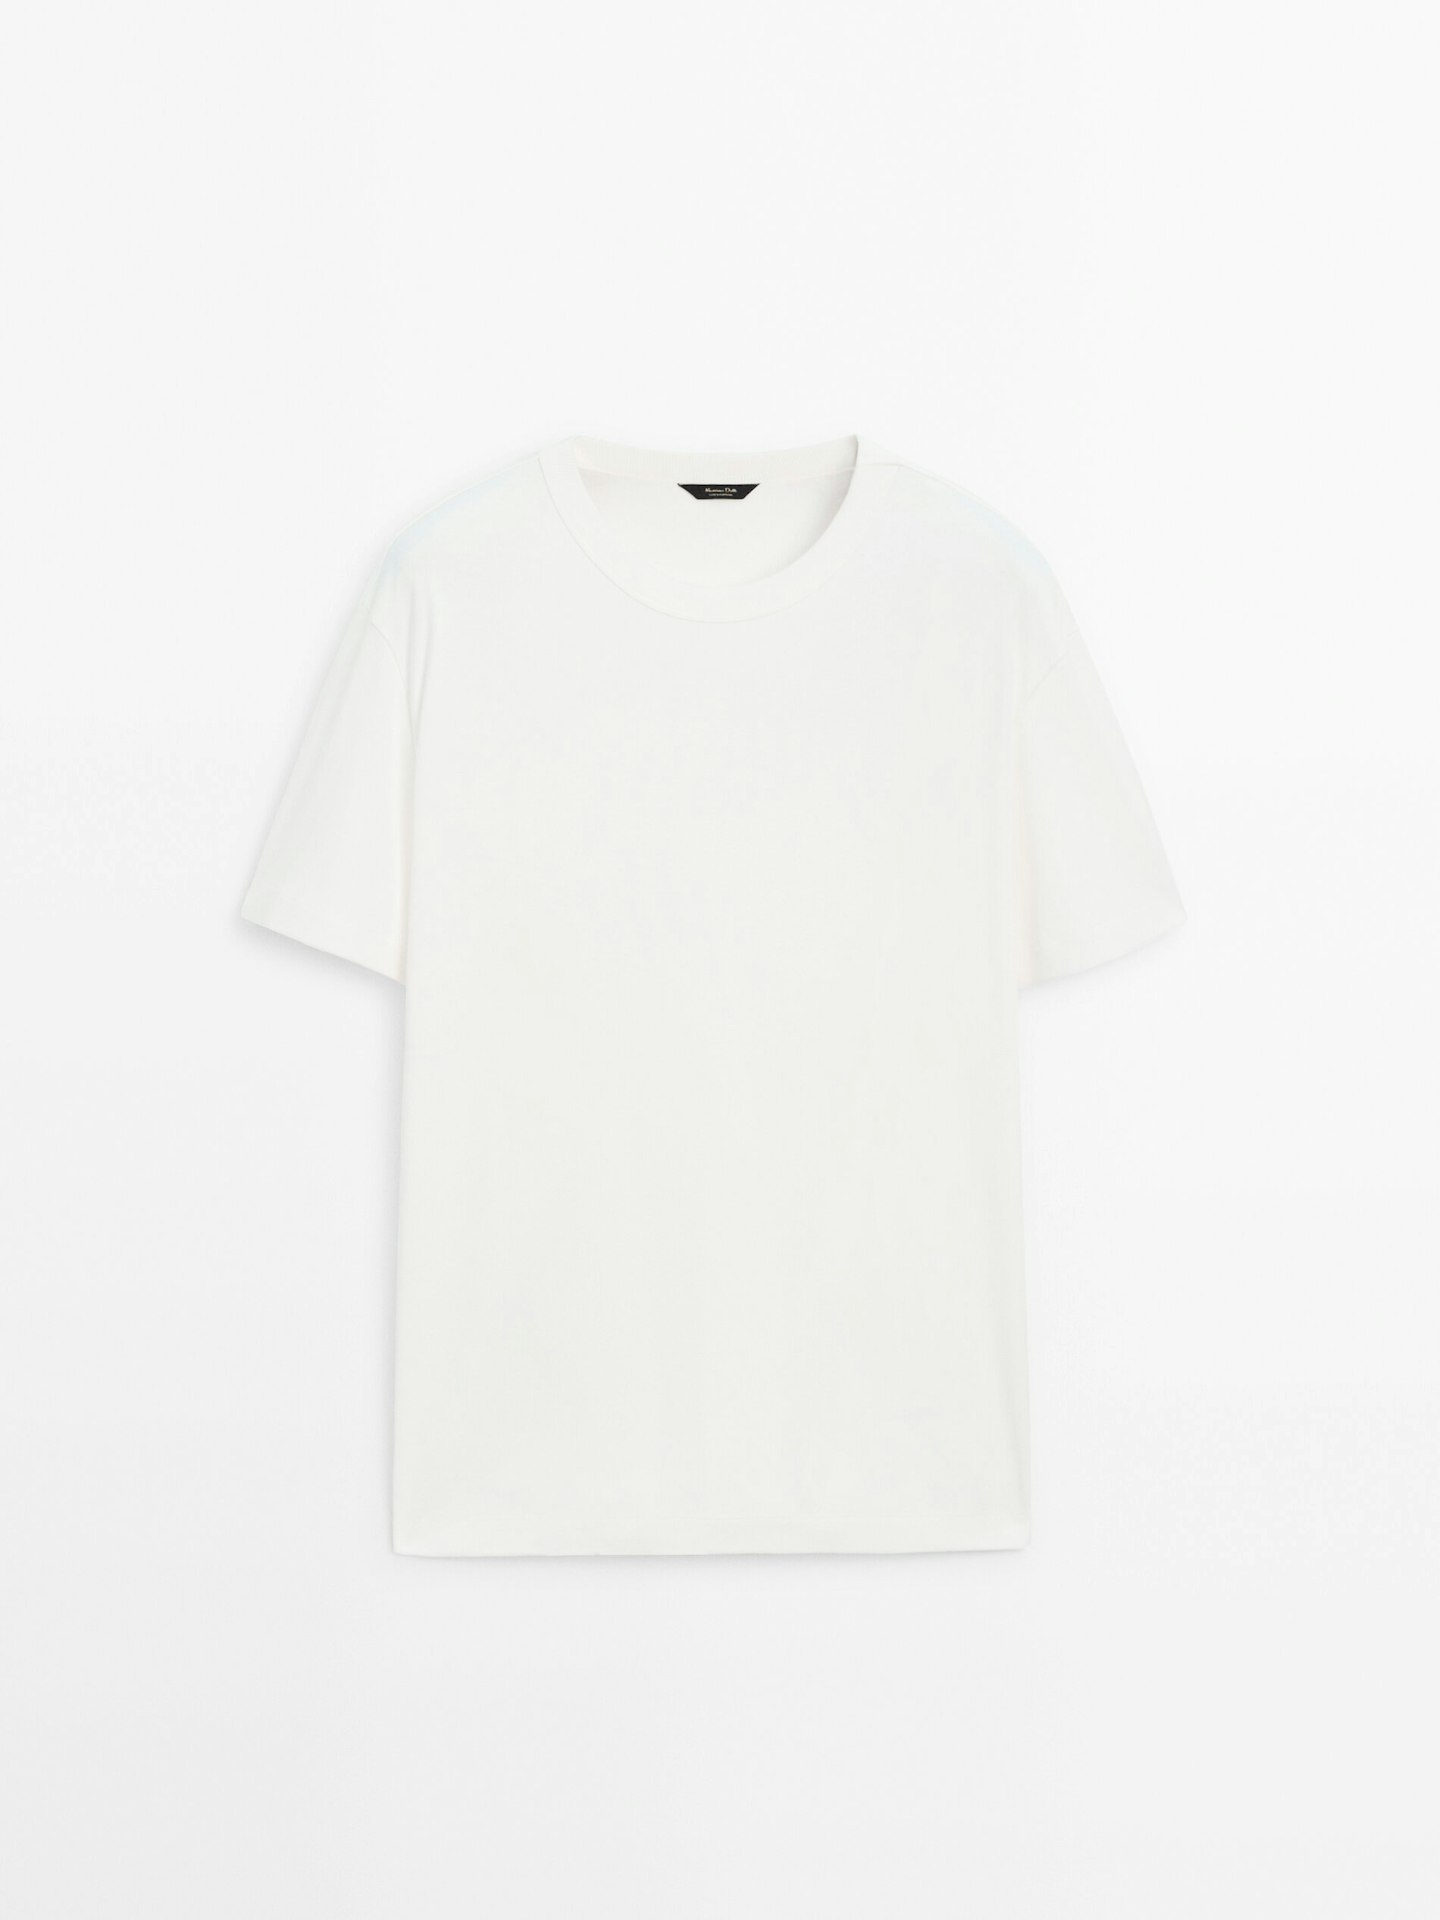 Massimo Dutti, 100% Cotton Short-Sleeve T-Shirt